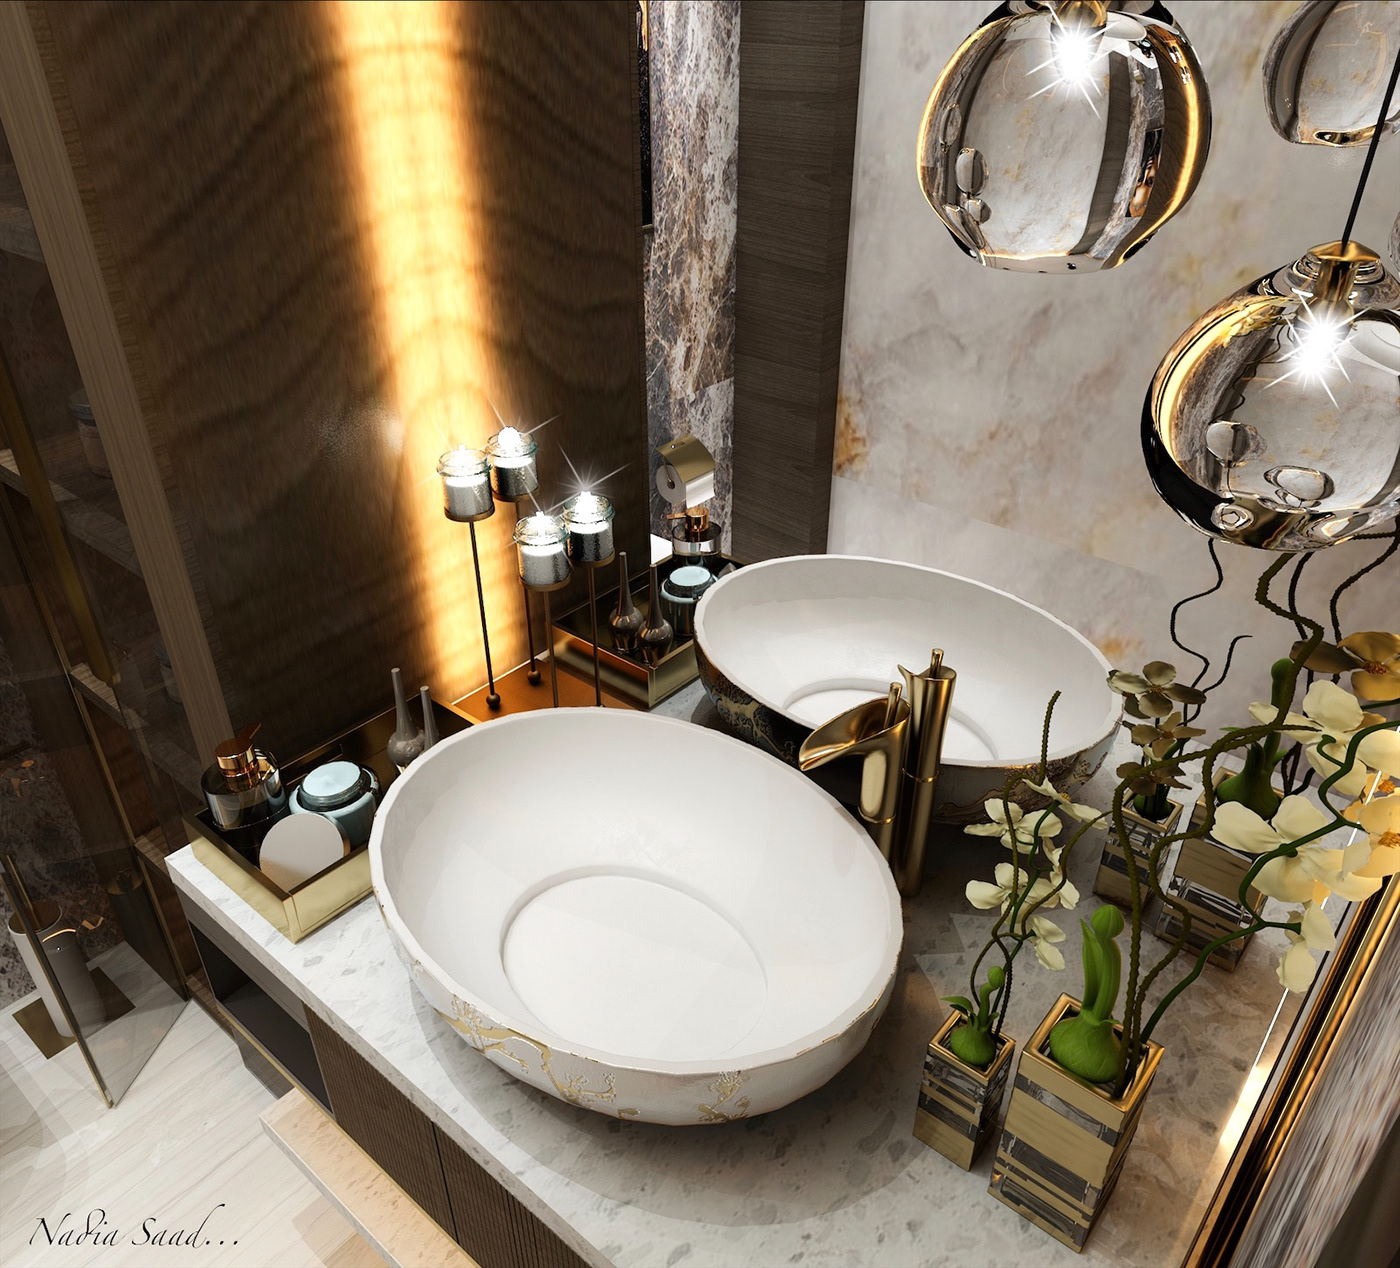 3dmax architecture bathroom design guest bathroom Interior nadia saad neoclassic